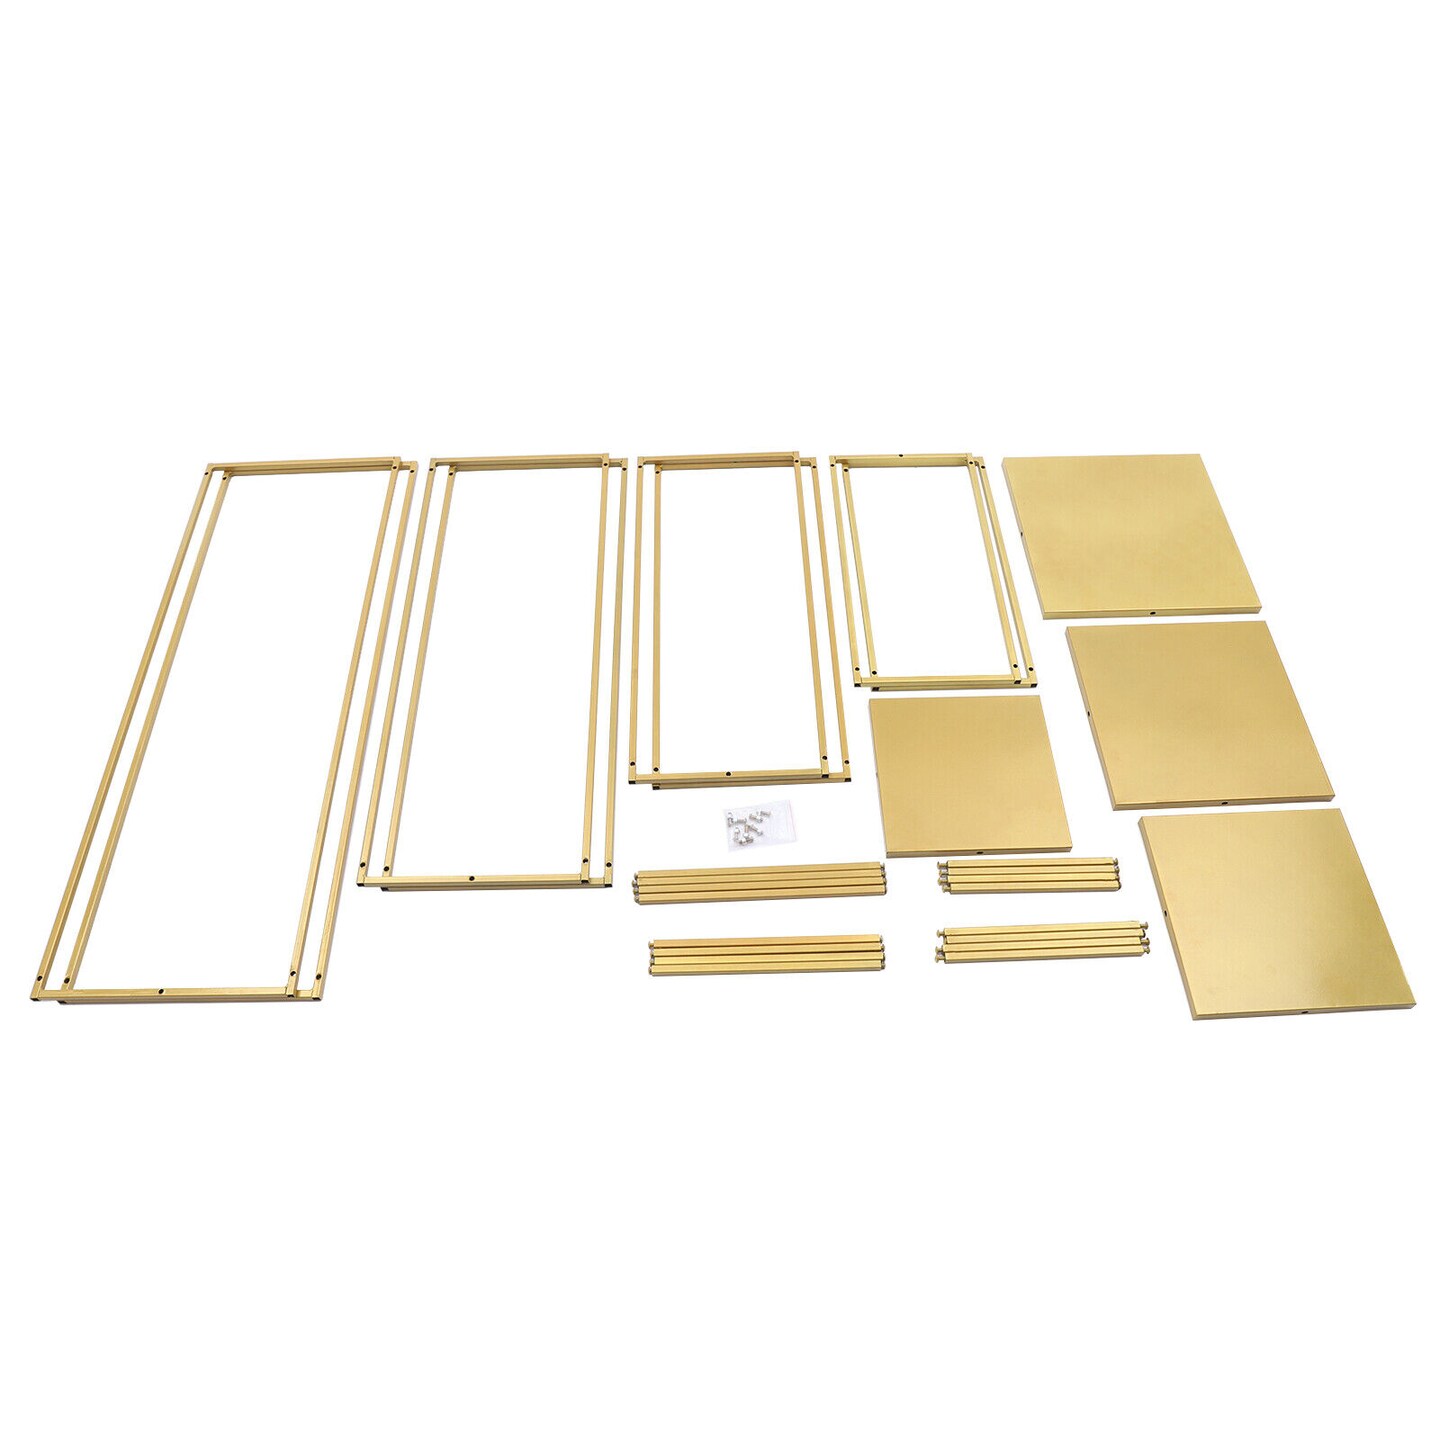 Kitcheniva 4Pcs Gold Column Cube Shape Metal Flower Stand